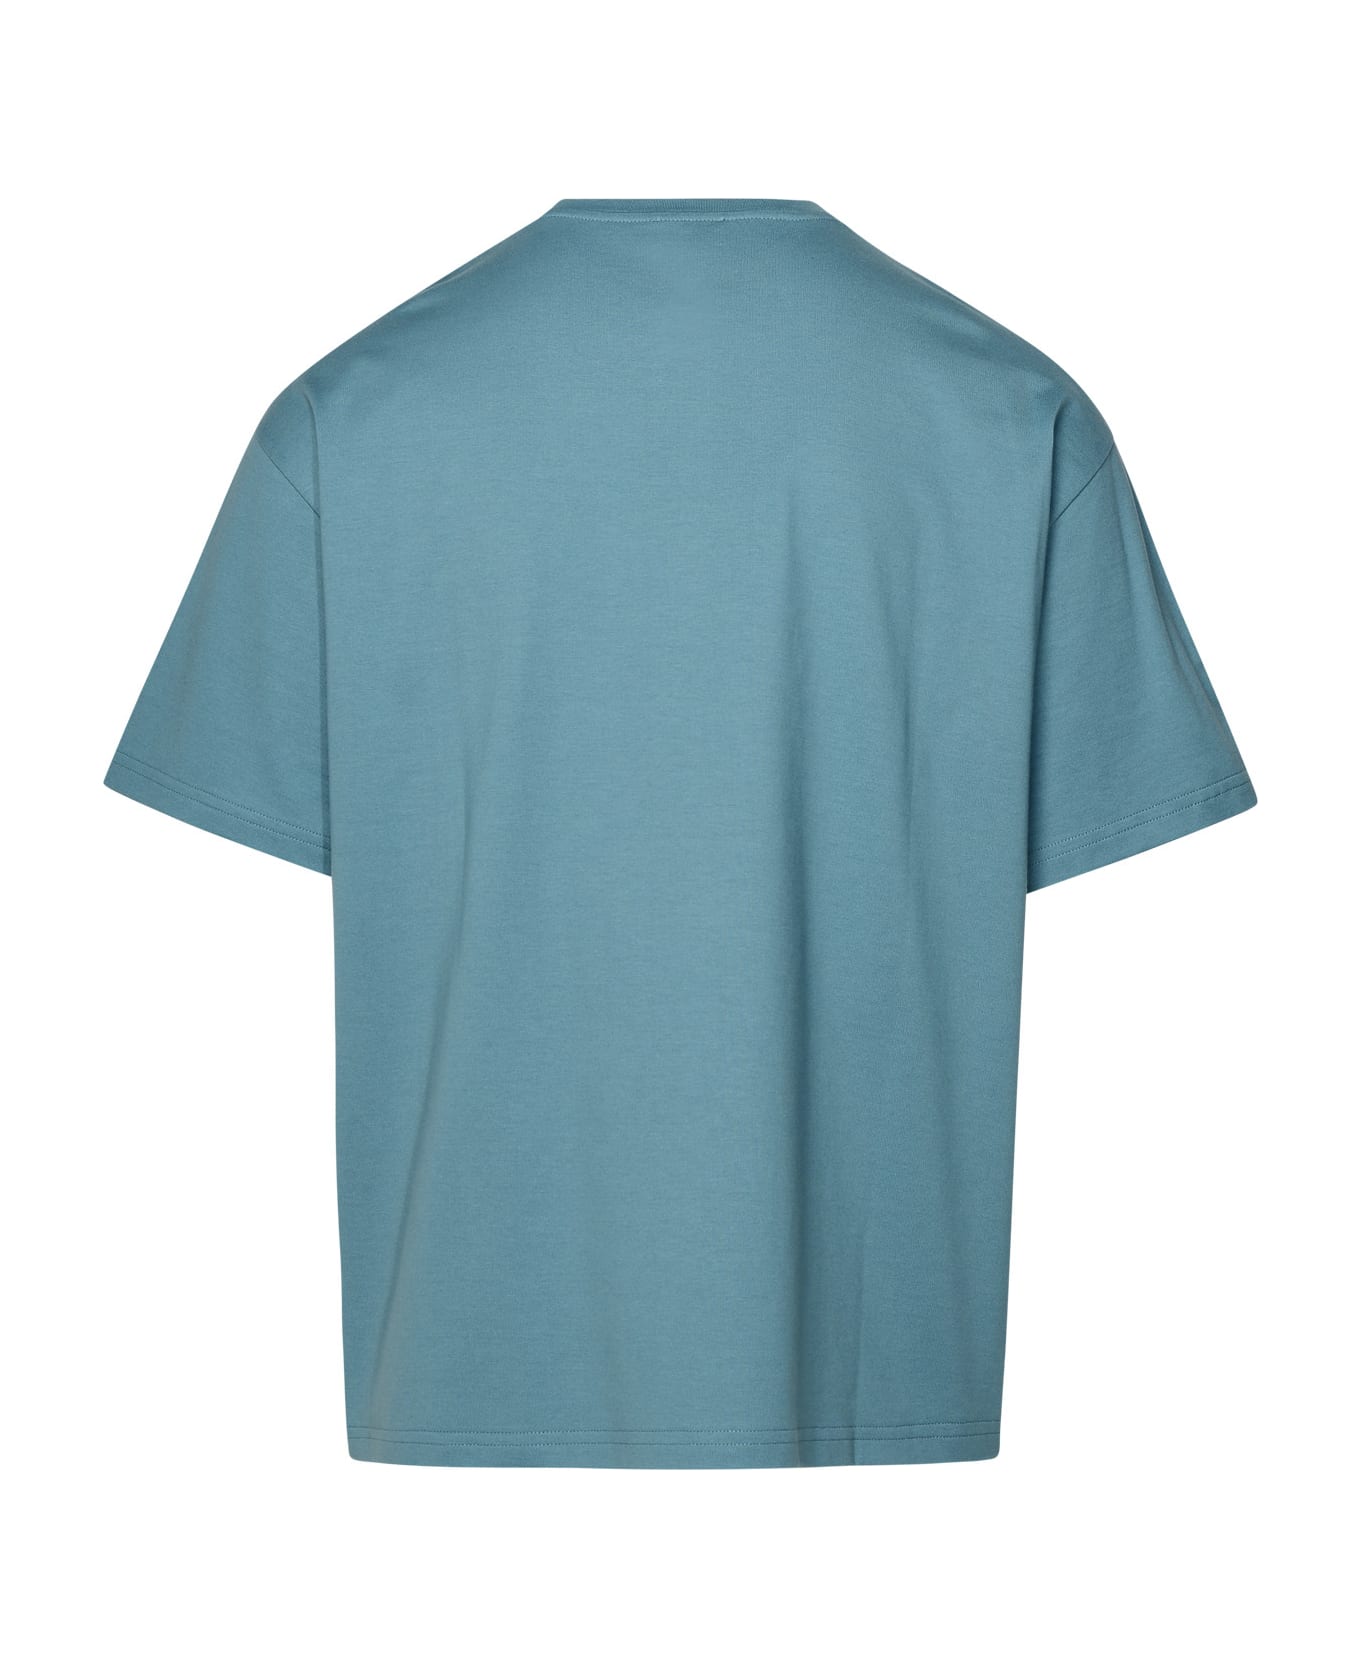 Etro Light Blue Cotton T-shirt - Light Blue